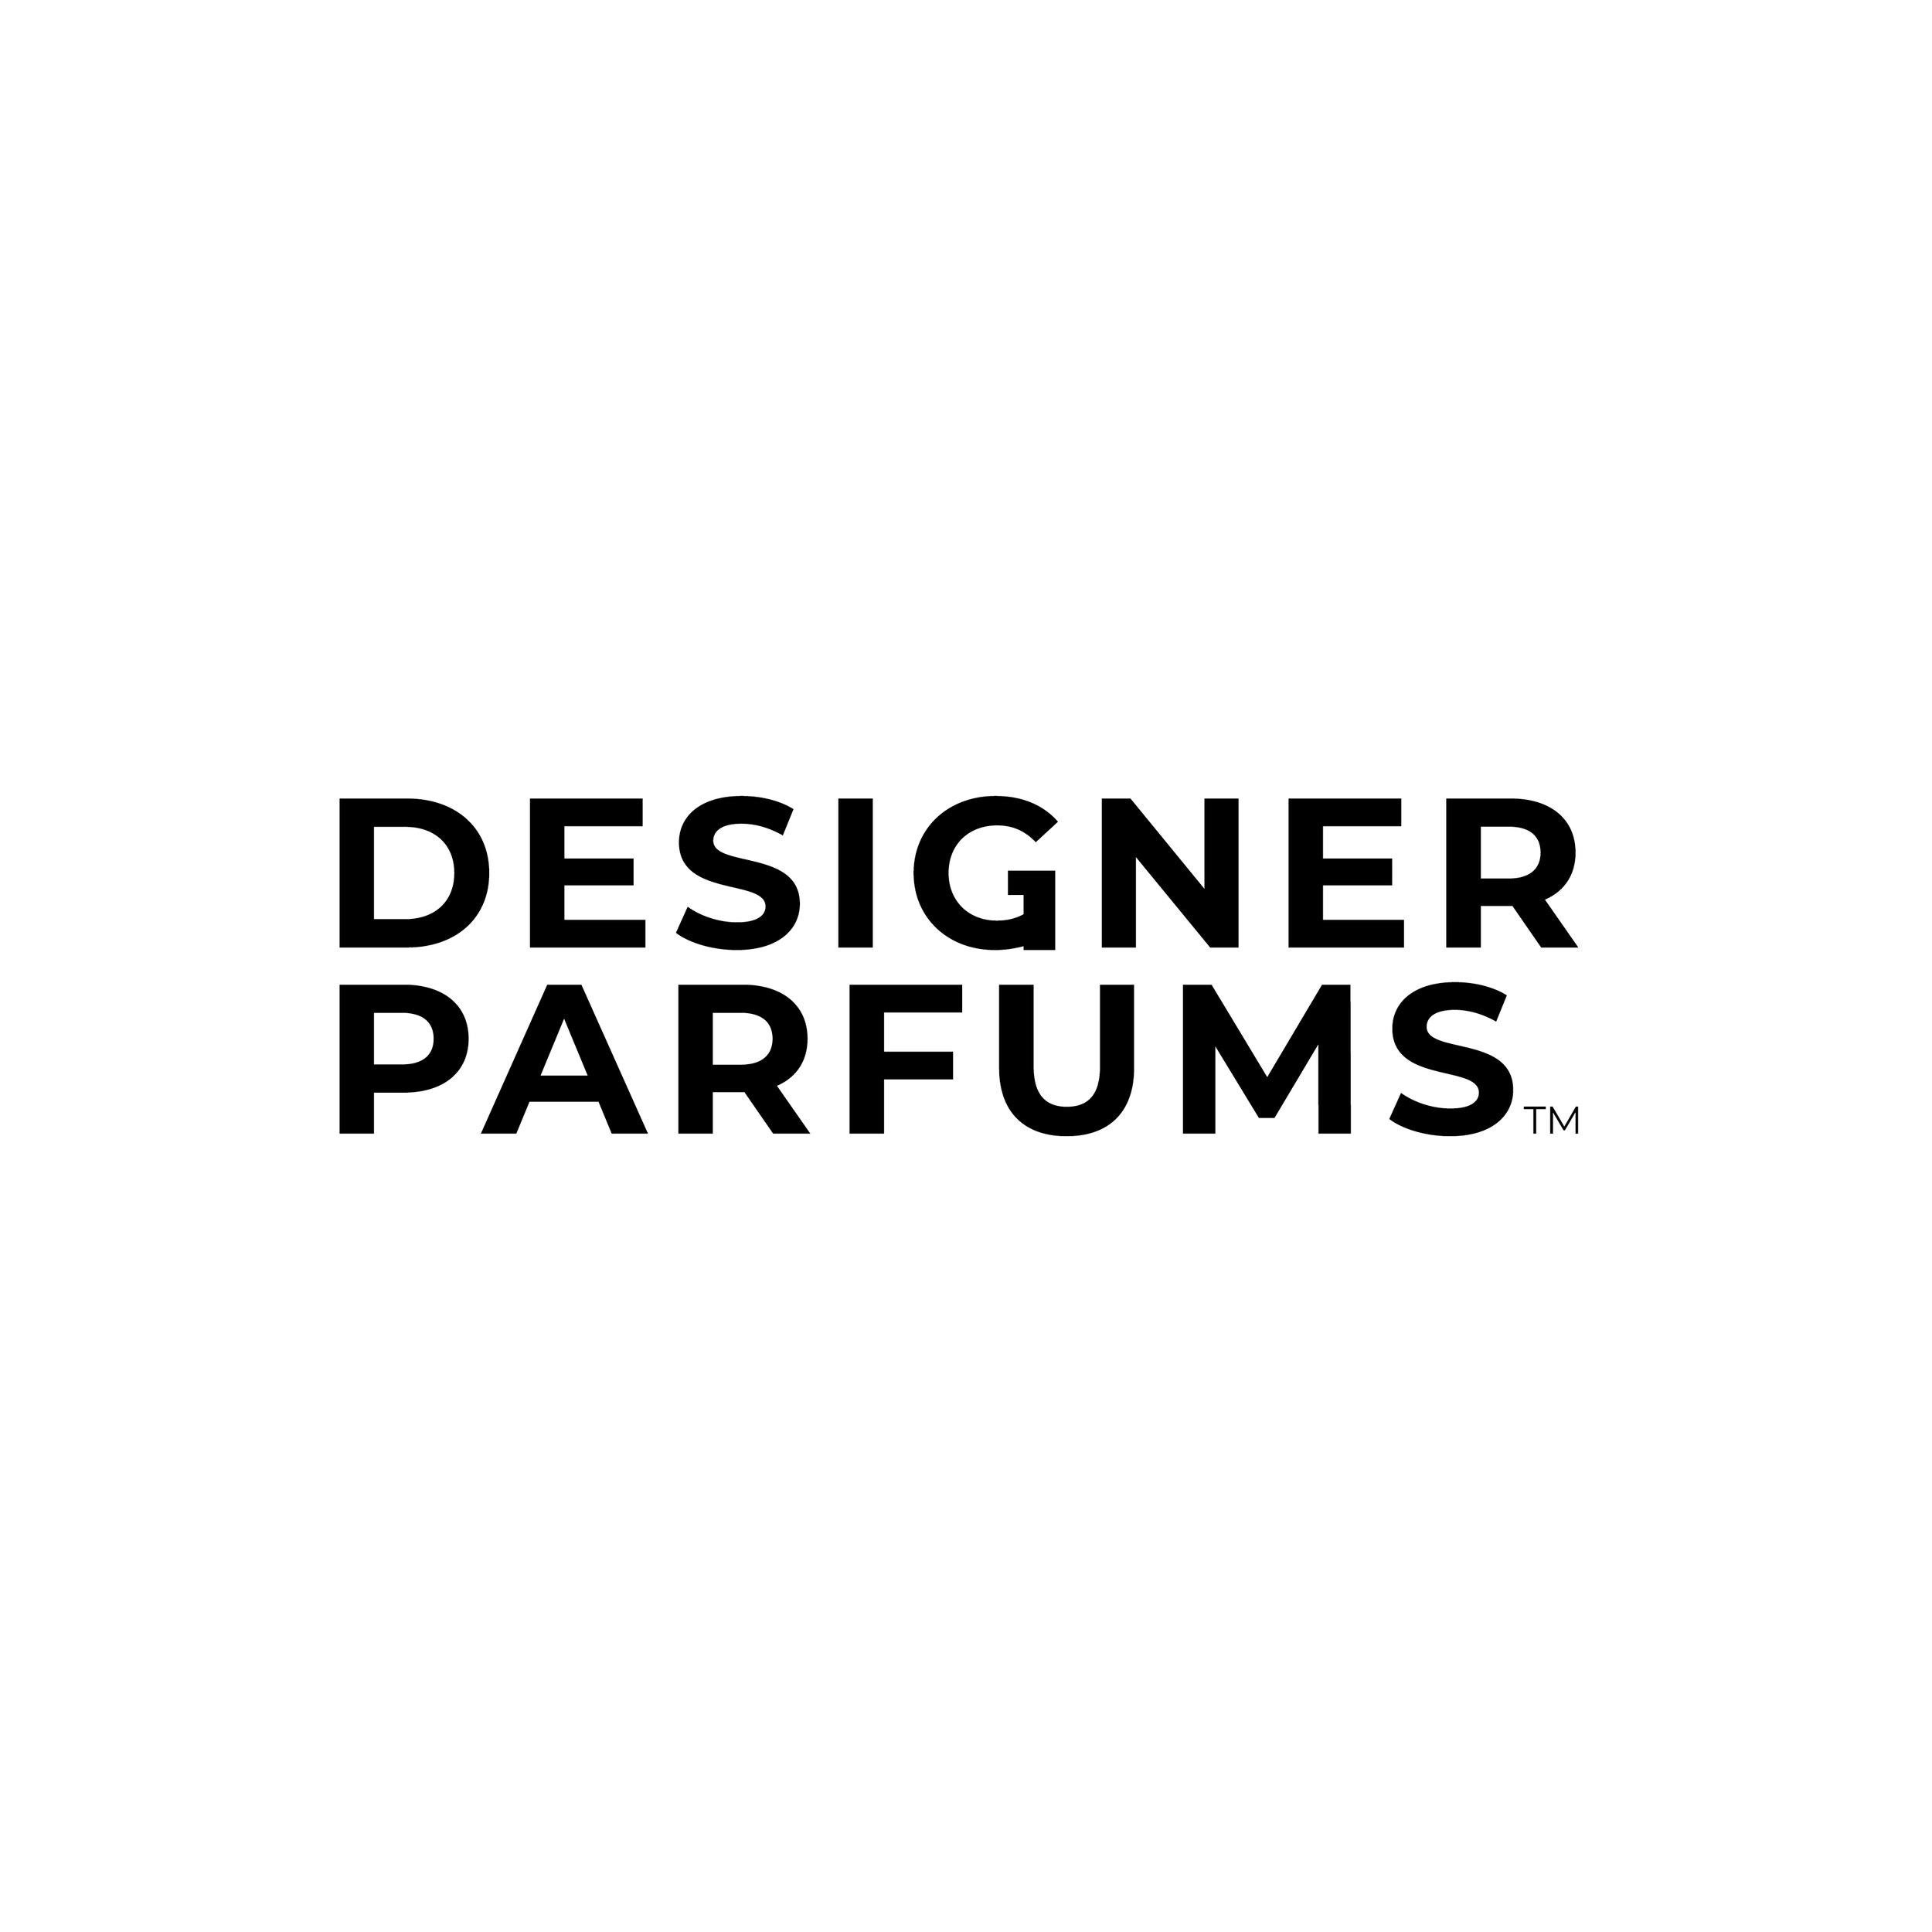 Designer Parfums.jpg